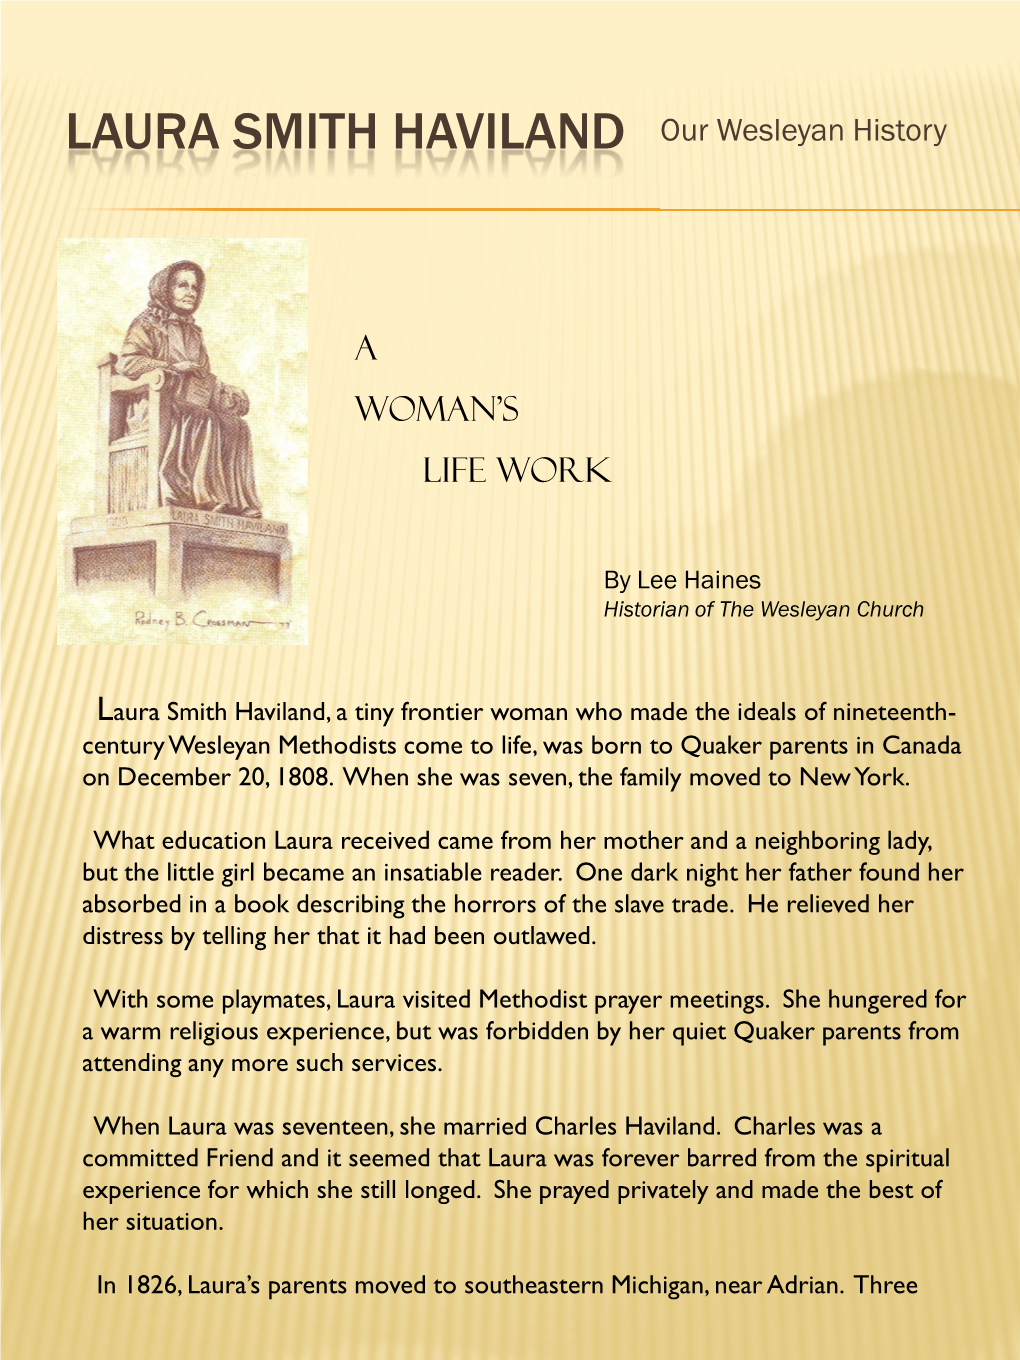 LAURA SMITH HAVILAND Our Wesleyan History